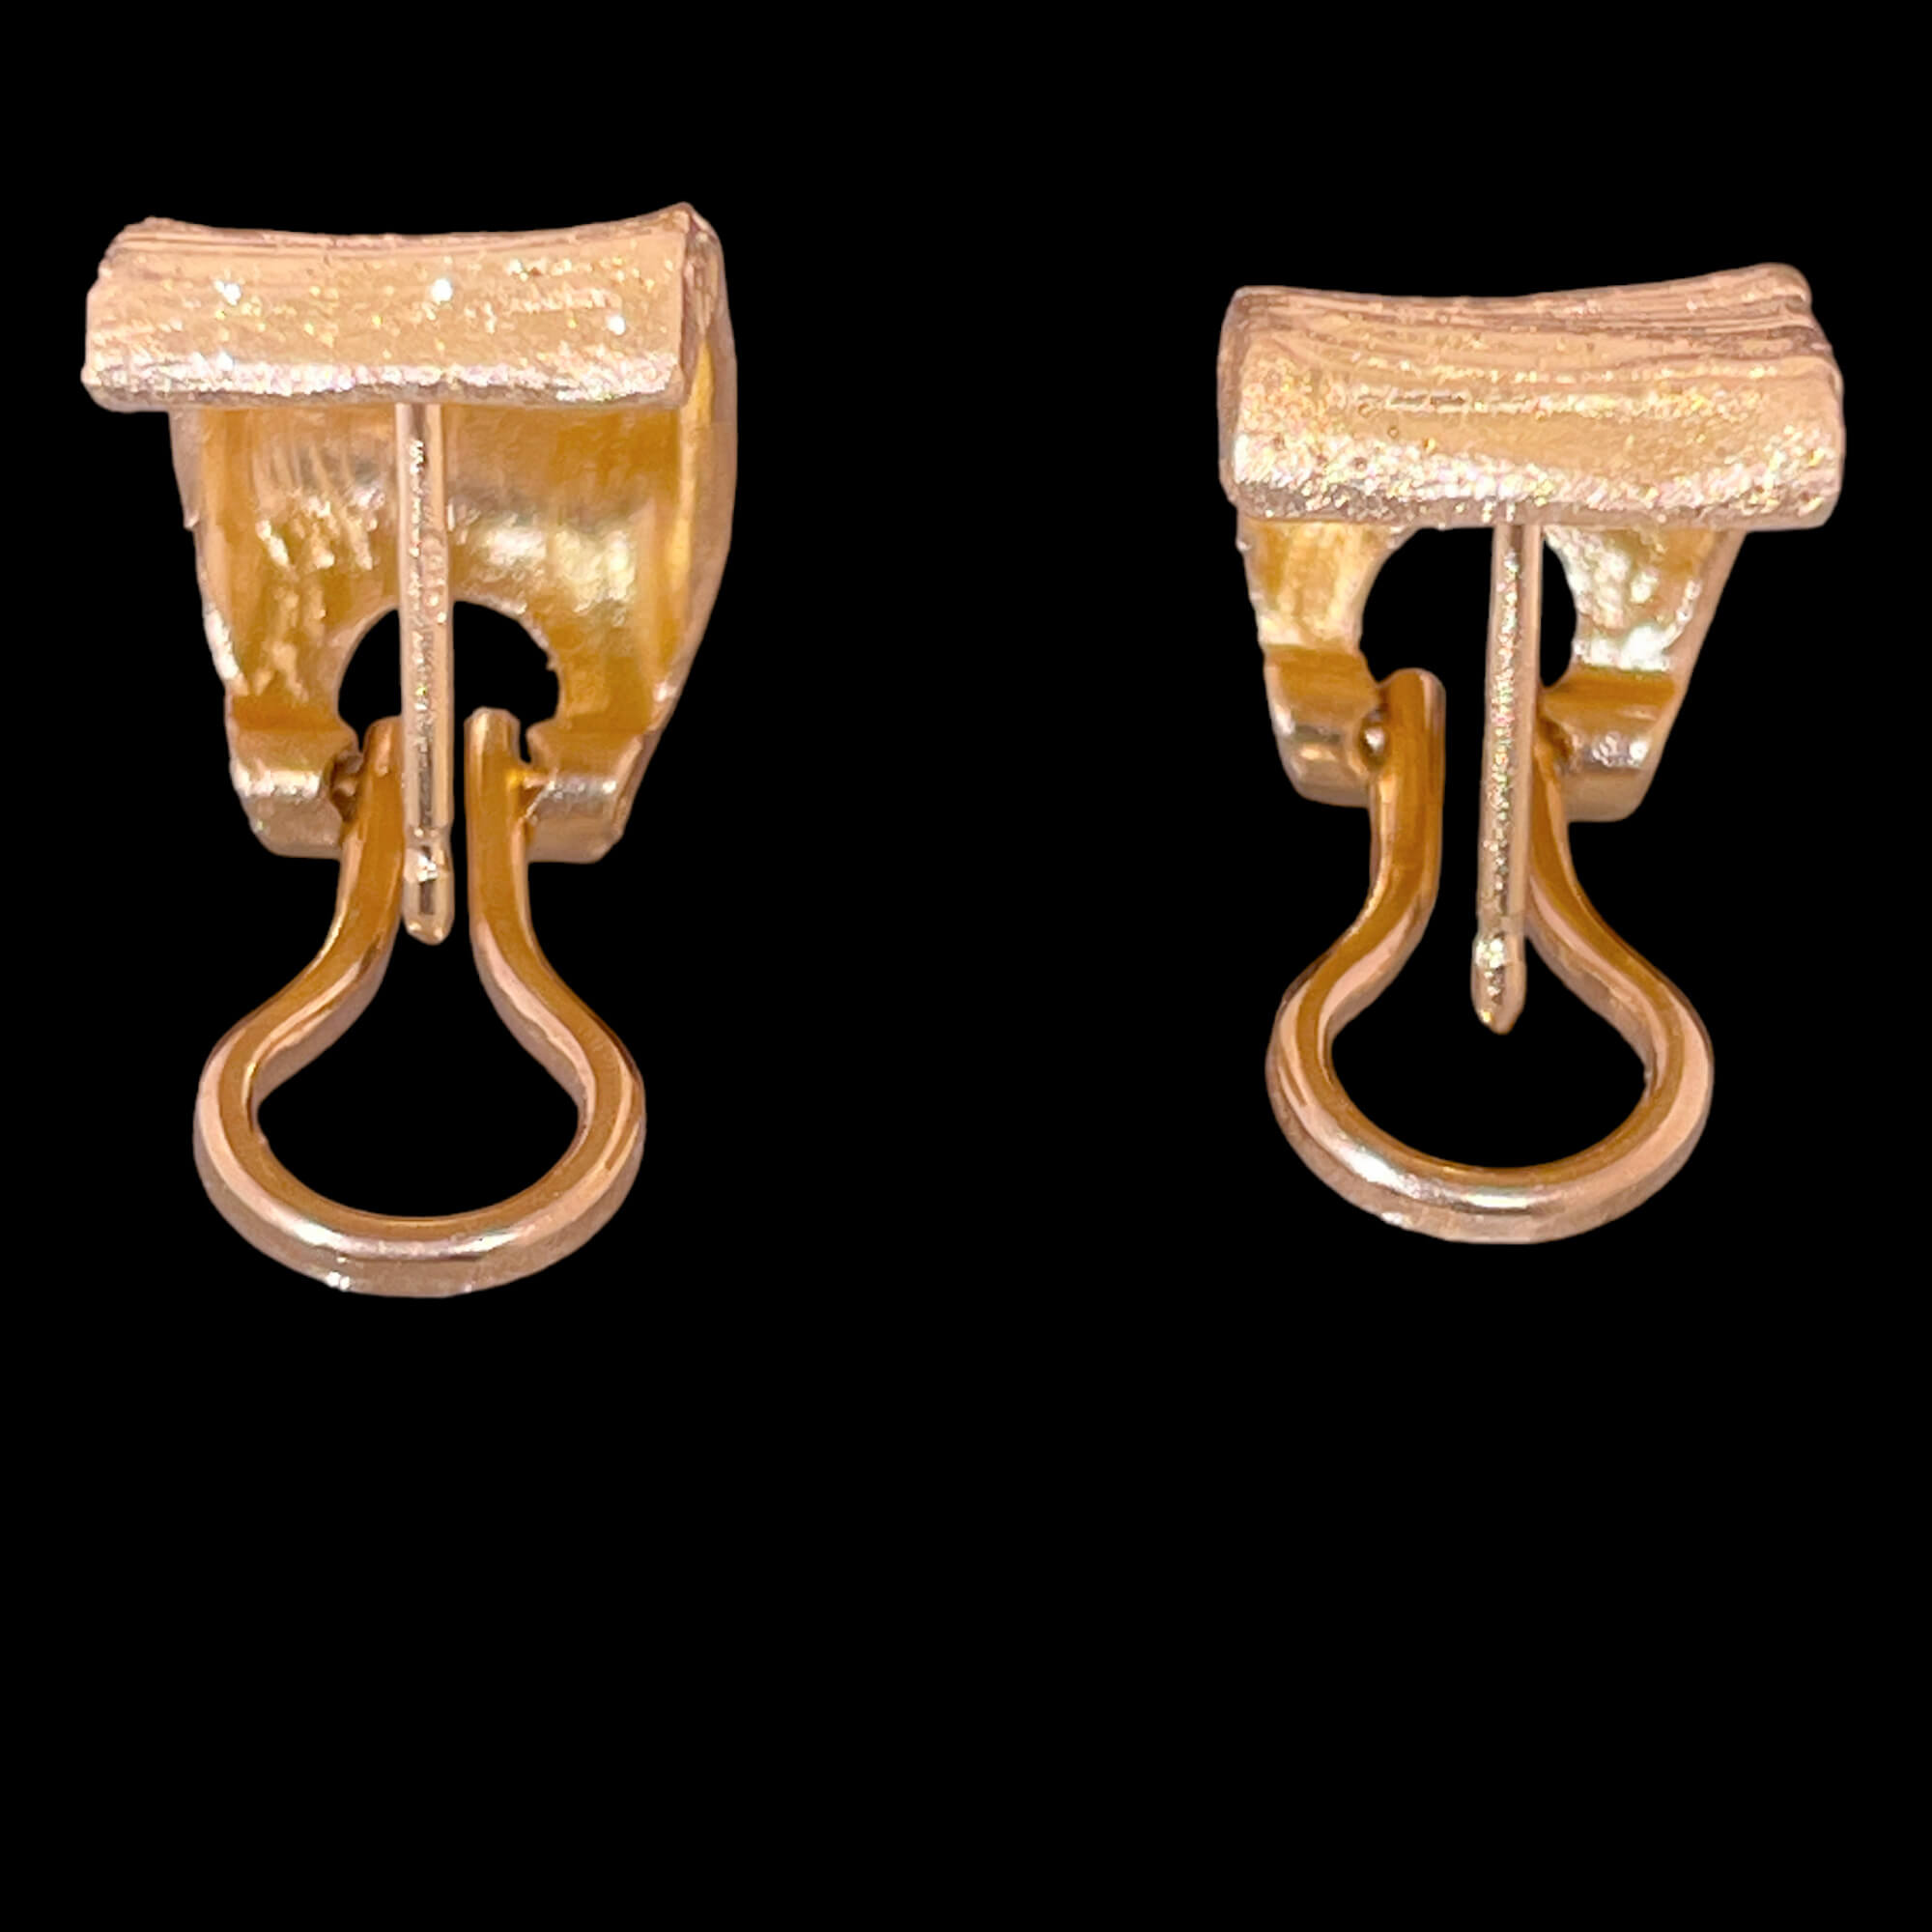 Rectangular and beautiful gilded earrings